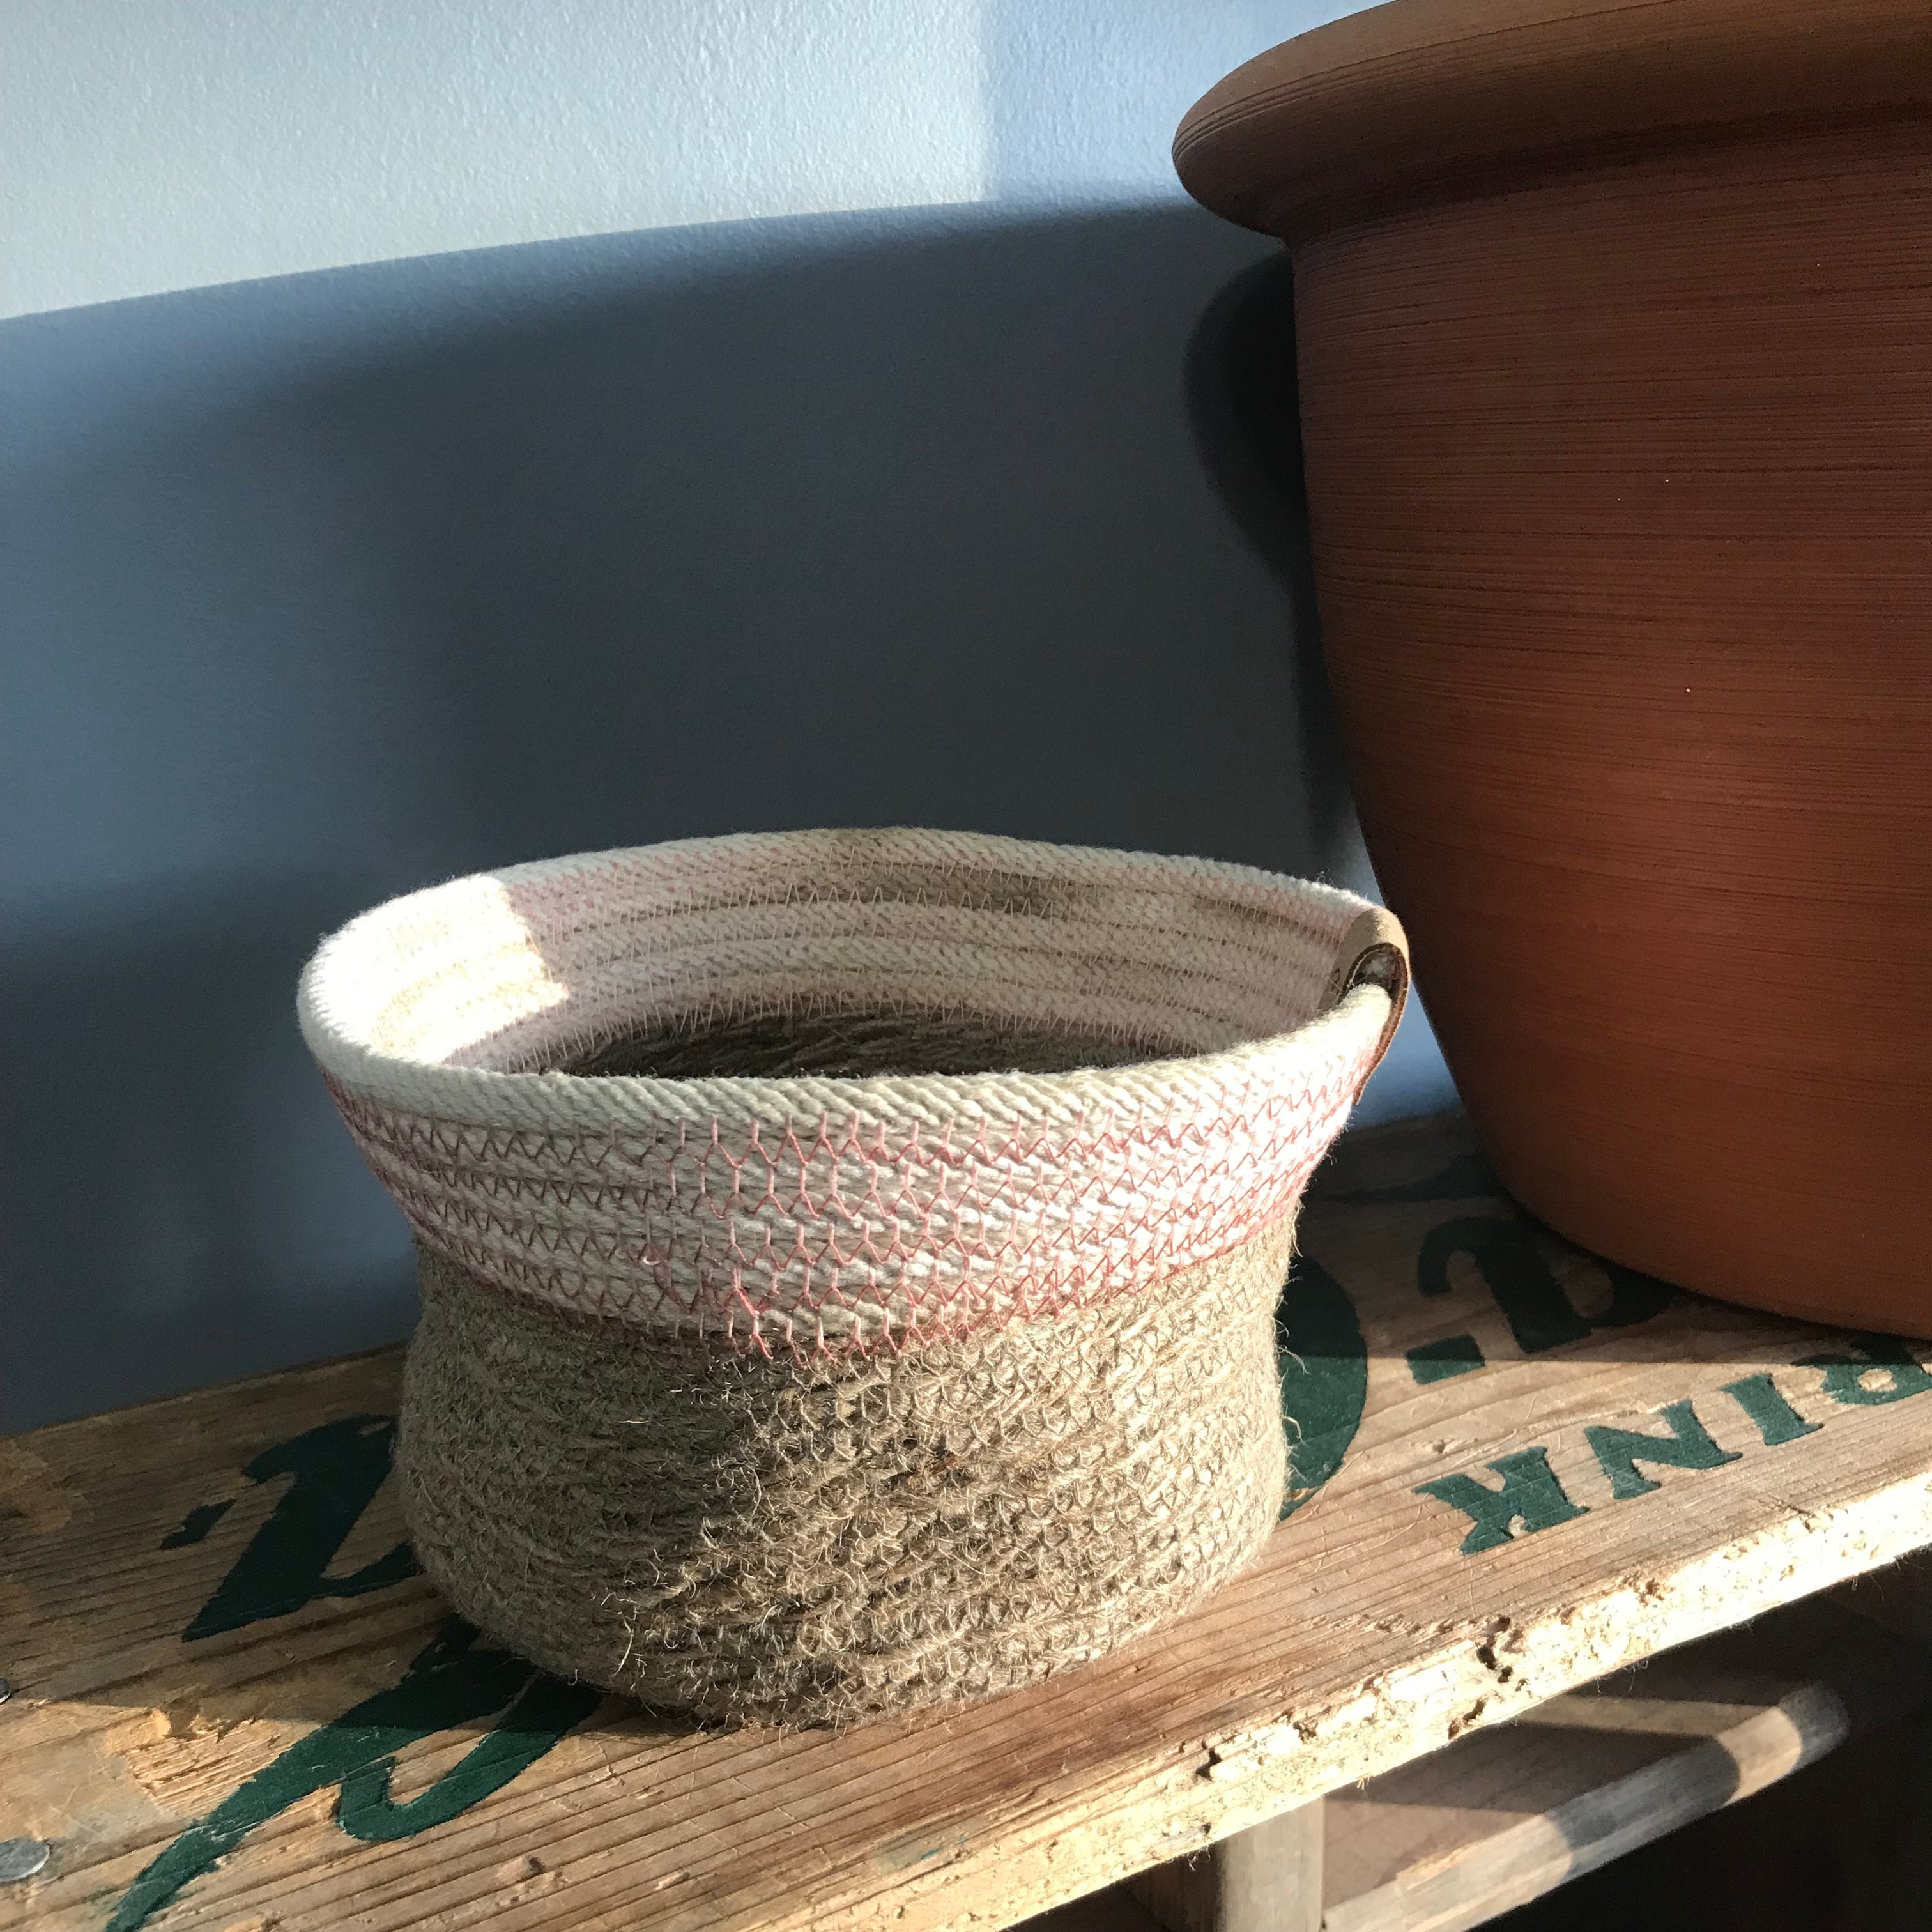 small rope bowl basket jute pink stitching